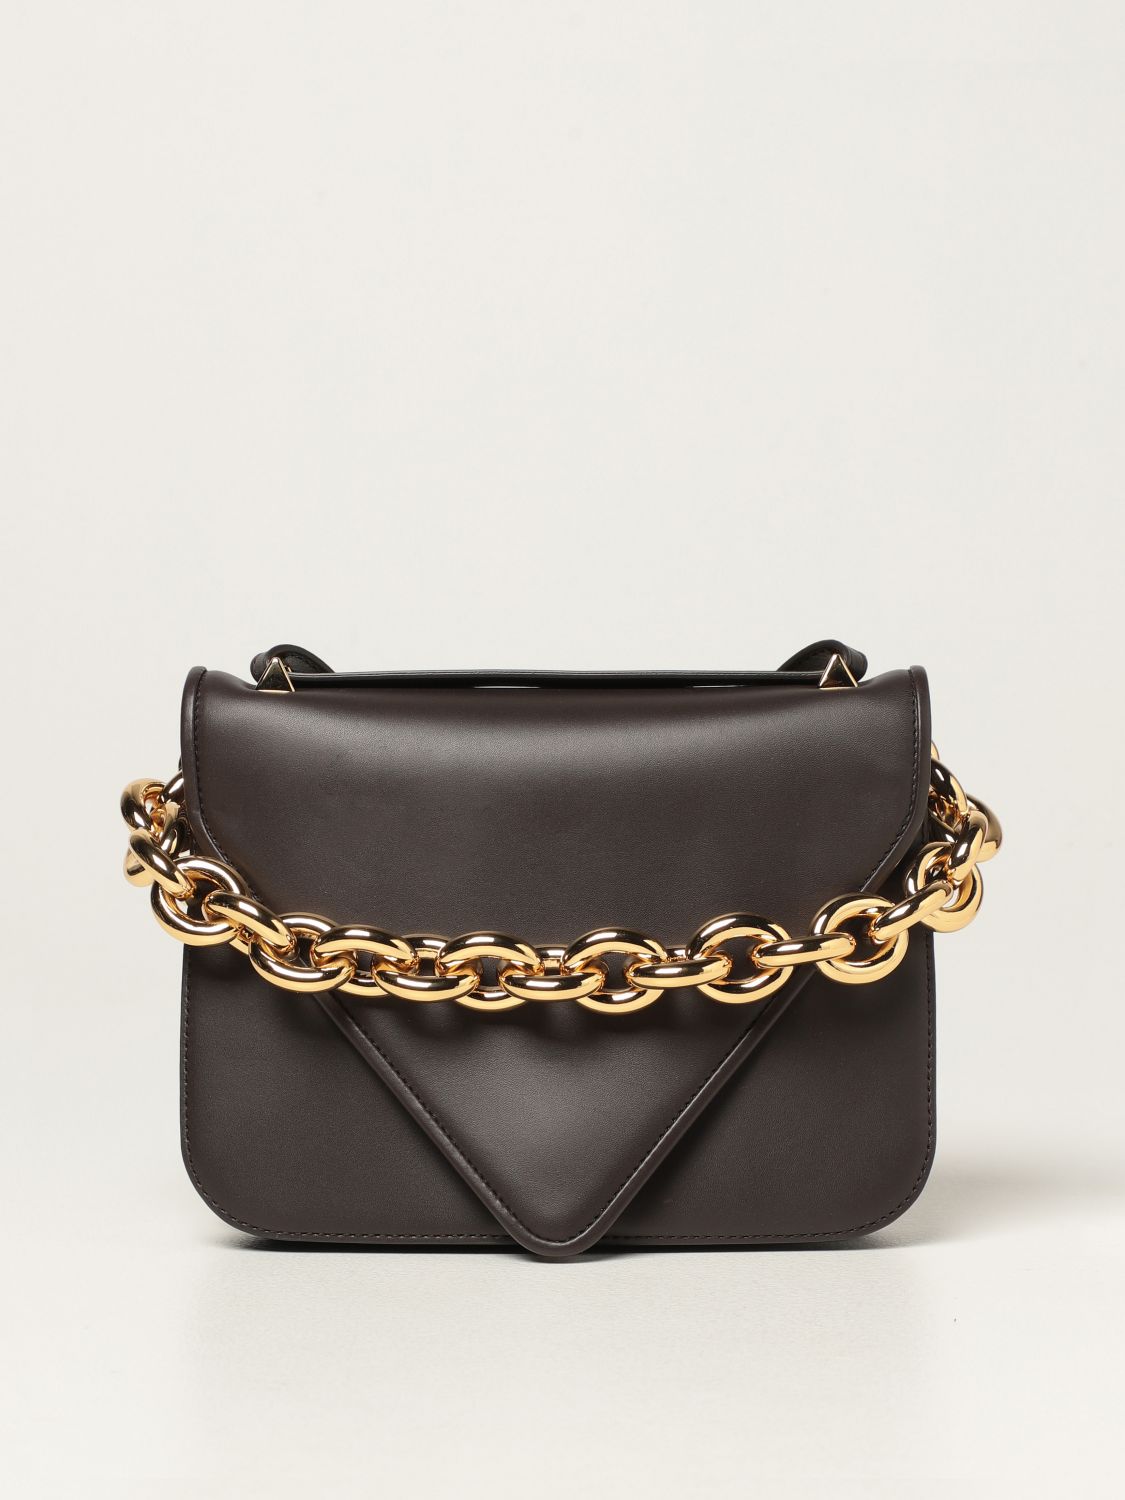 Bottega Veneta Mount Bag In Leather With Chain Detail In Dark | ModeSens